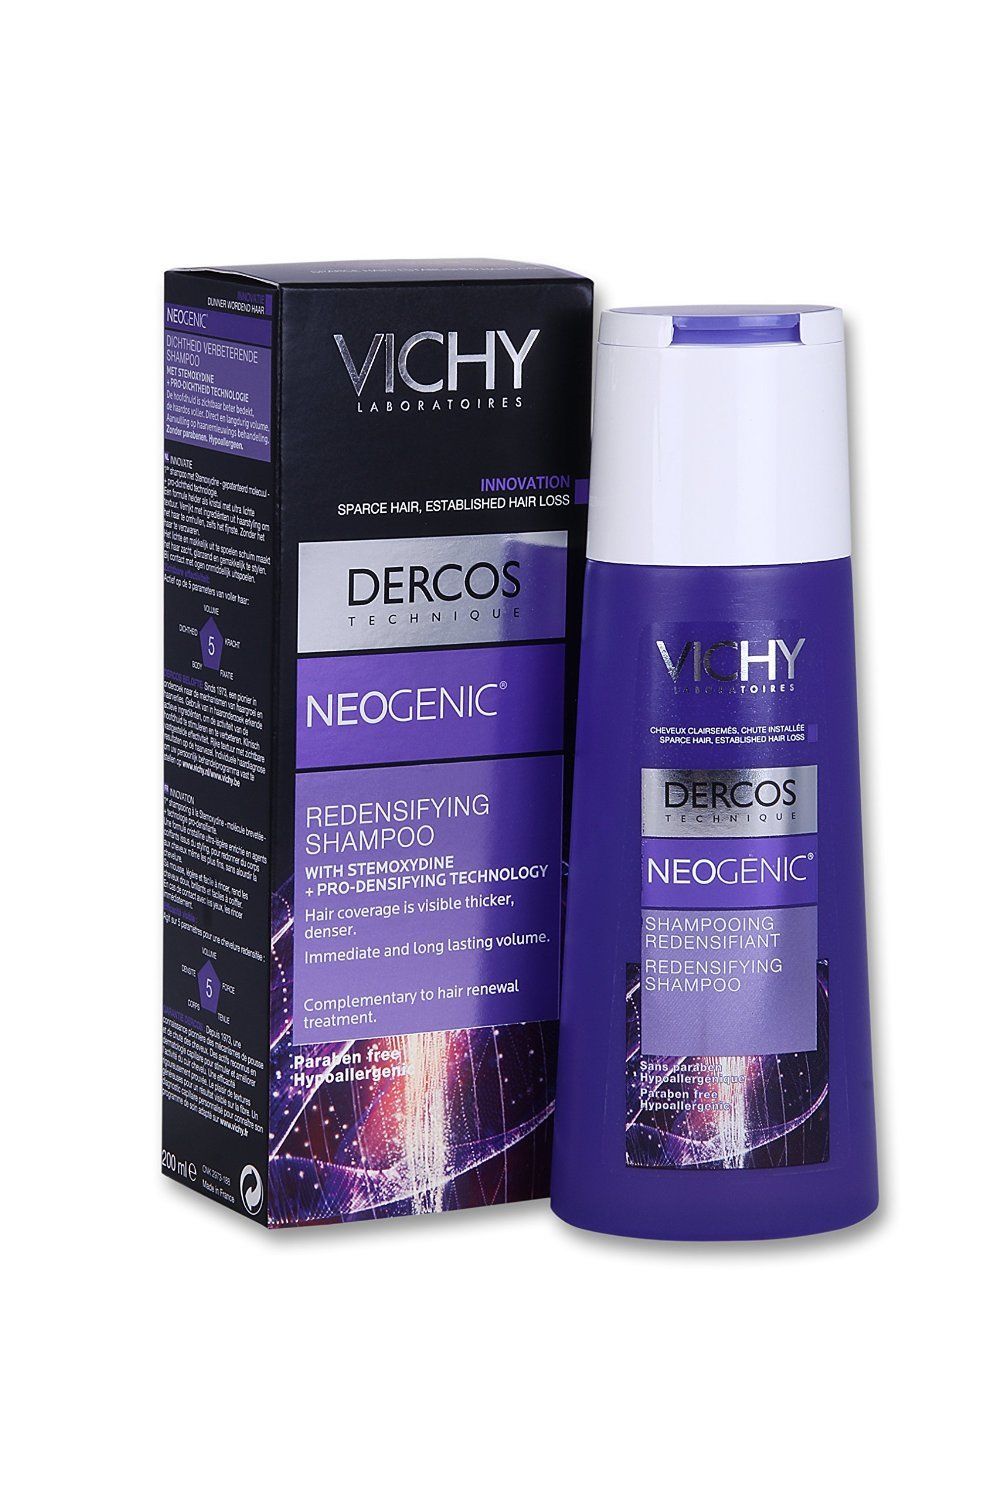 Vichy Dercos Neogenic Redensifying Shampoo 200ml - image 1 of 4